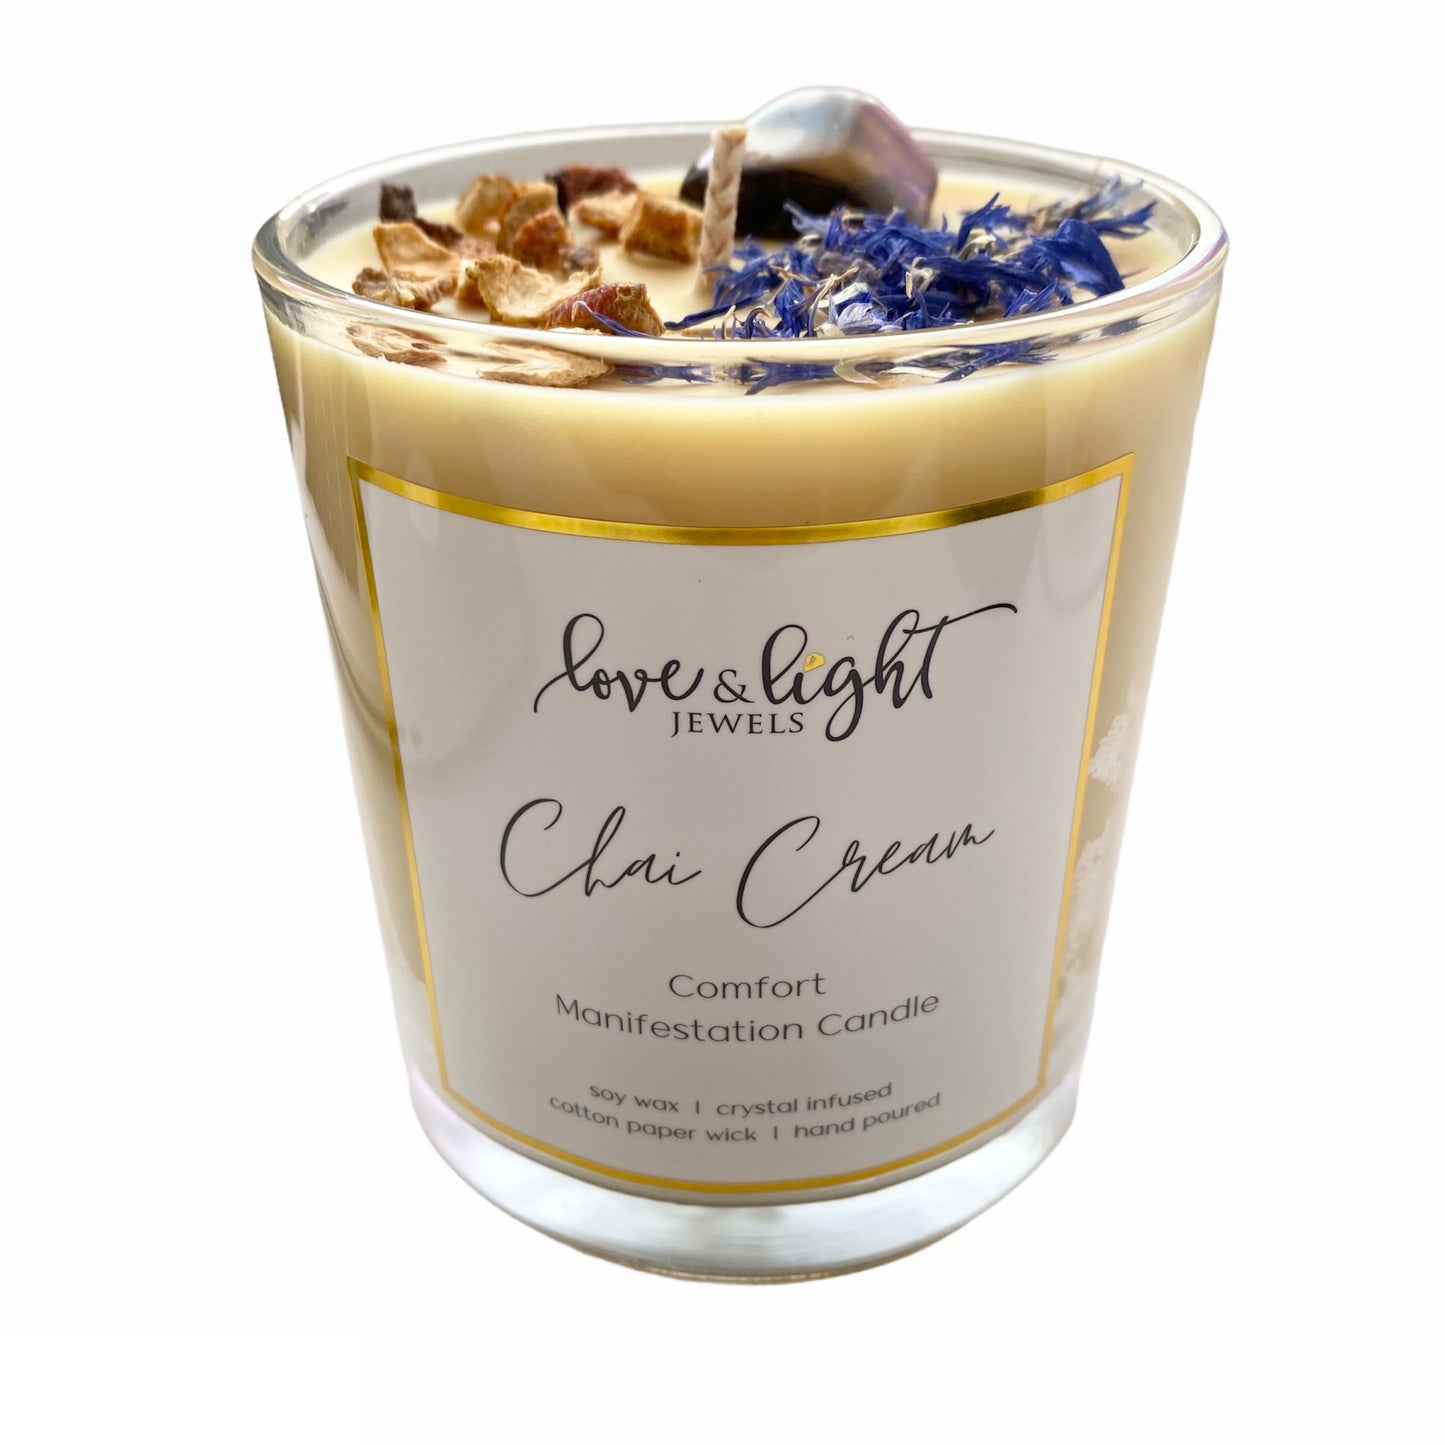 “Chai Cream” Comfort Manifestation Candle